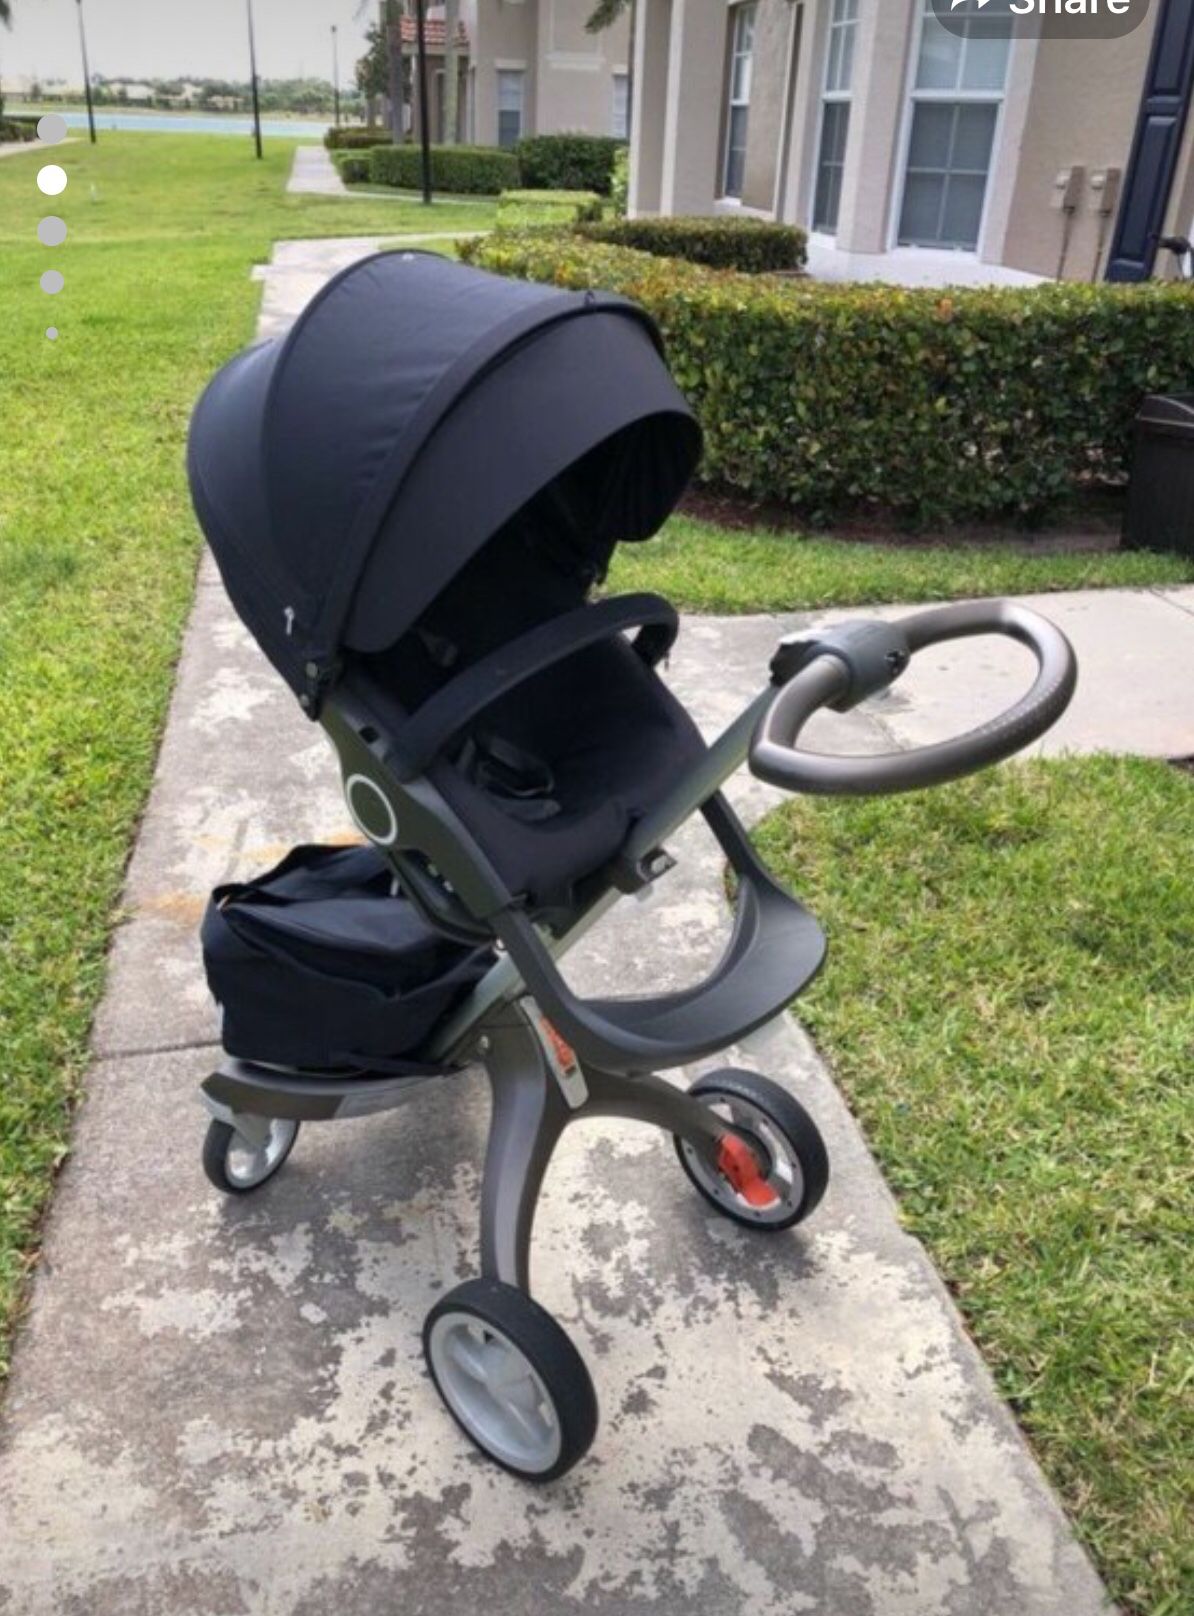 Stokke baby stroller + maxcosi car seat